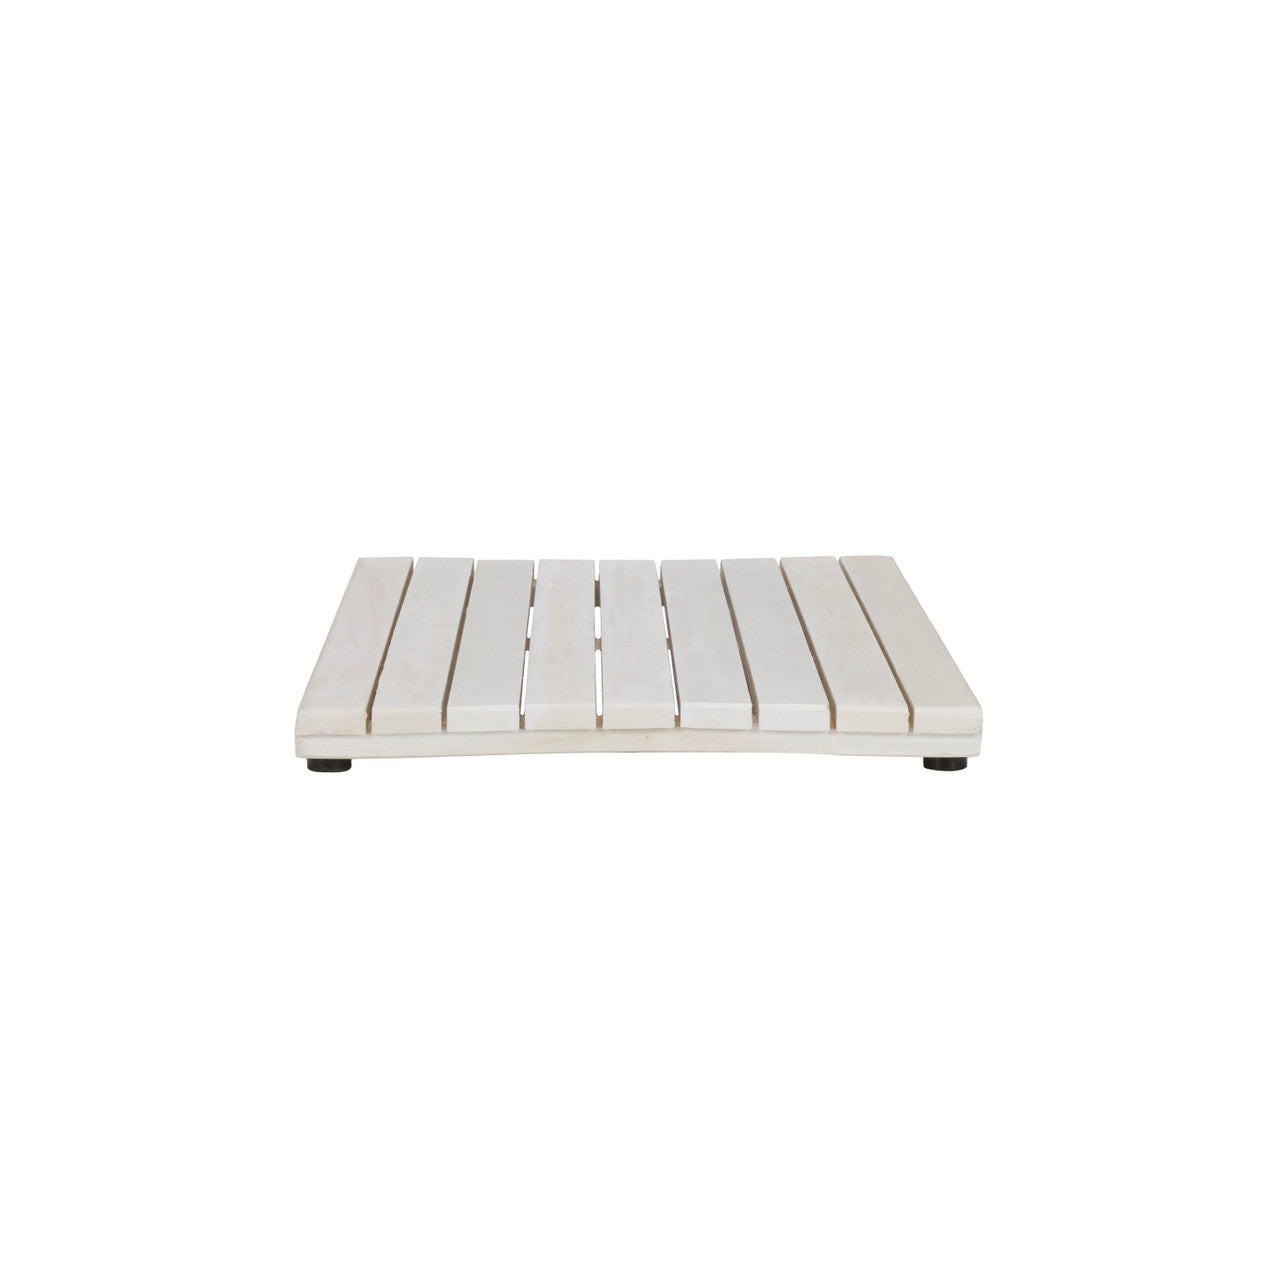 CoastalVogue® Eleganto® 23” Floor Mat in a Driftwood Finish